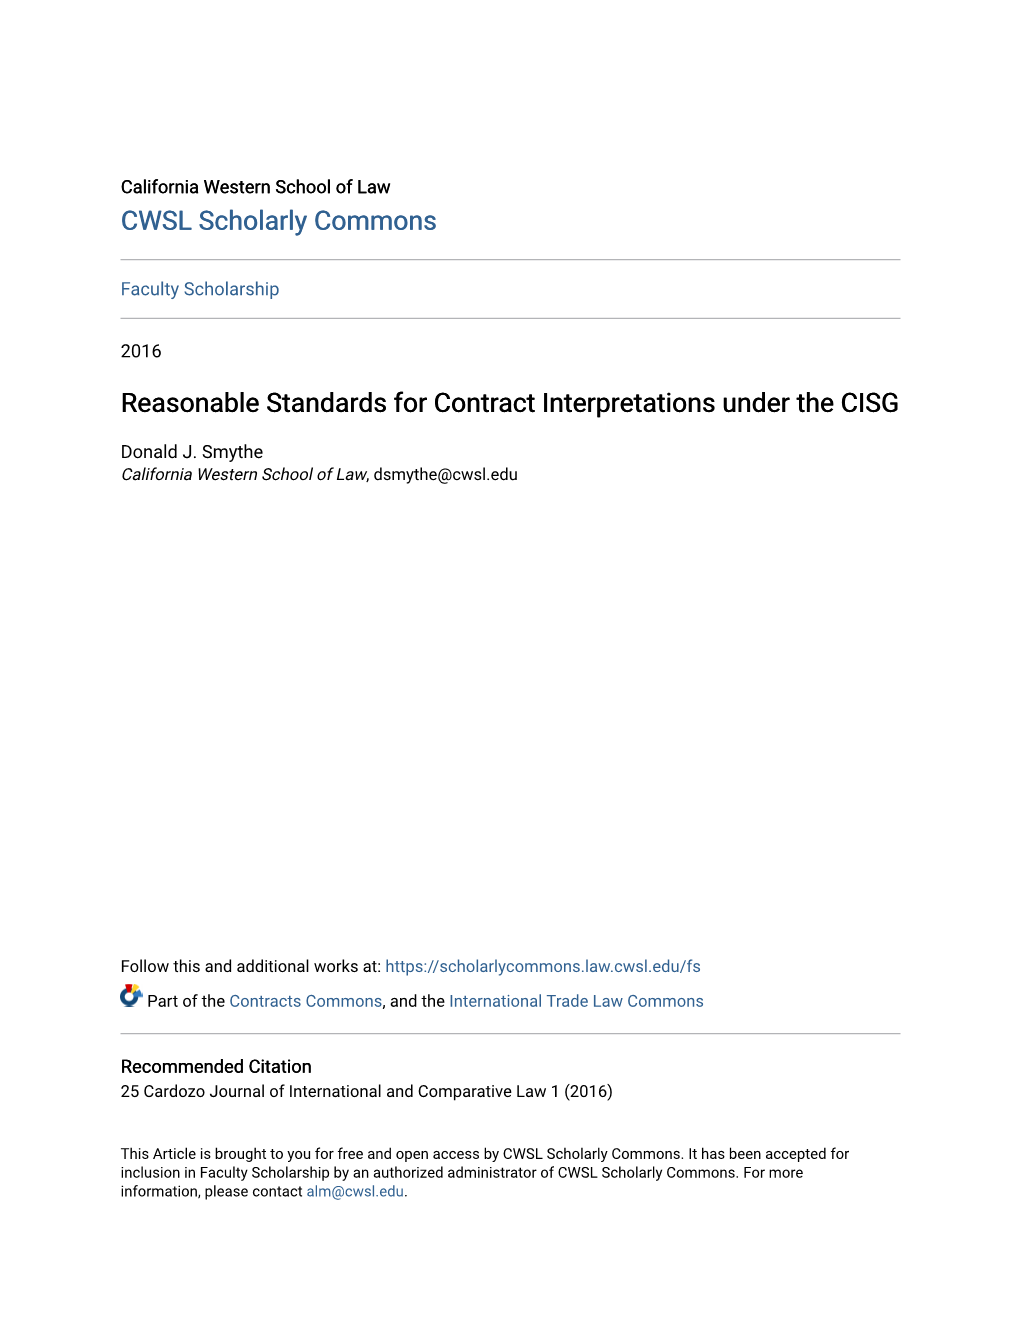 Reasonable Standards for Contract Interpretations Under the CISG